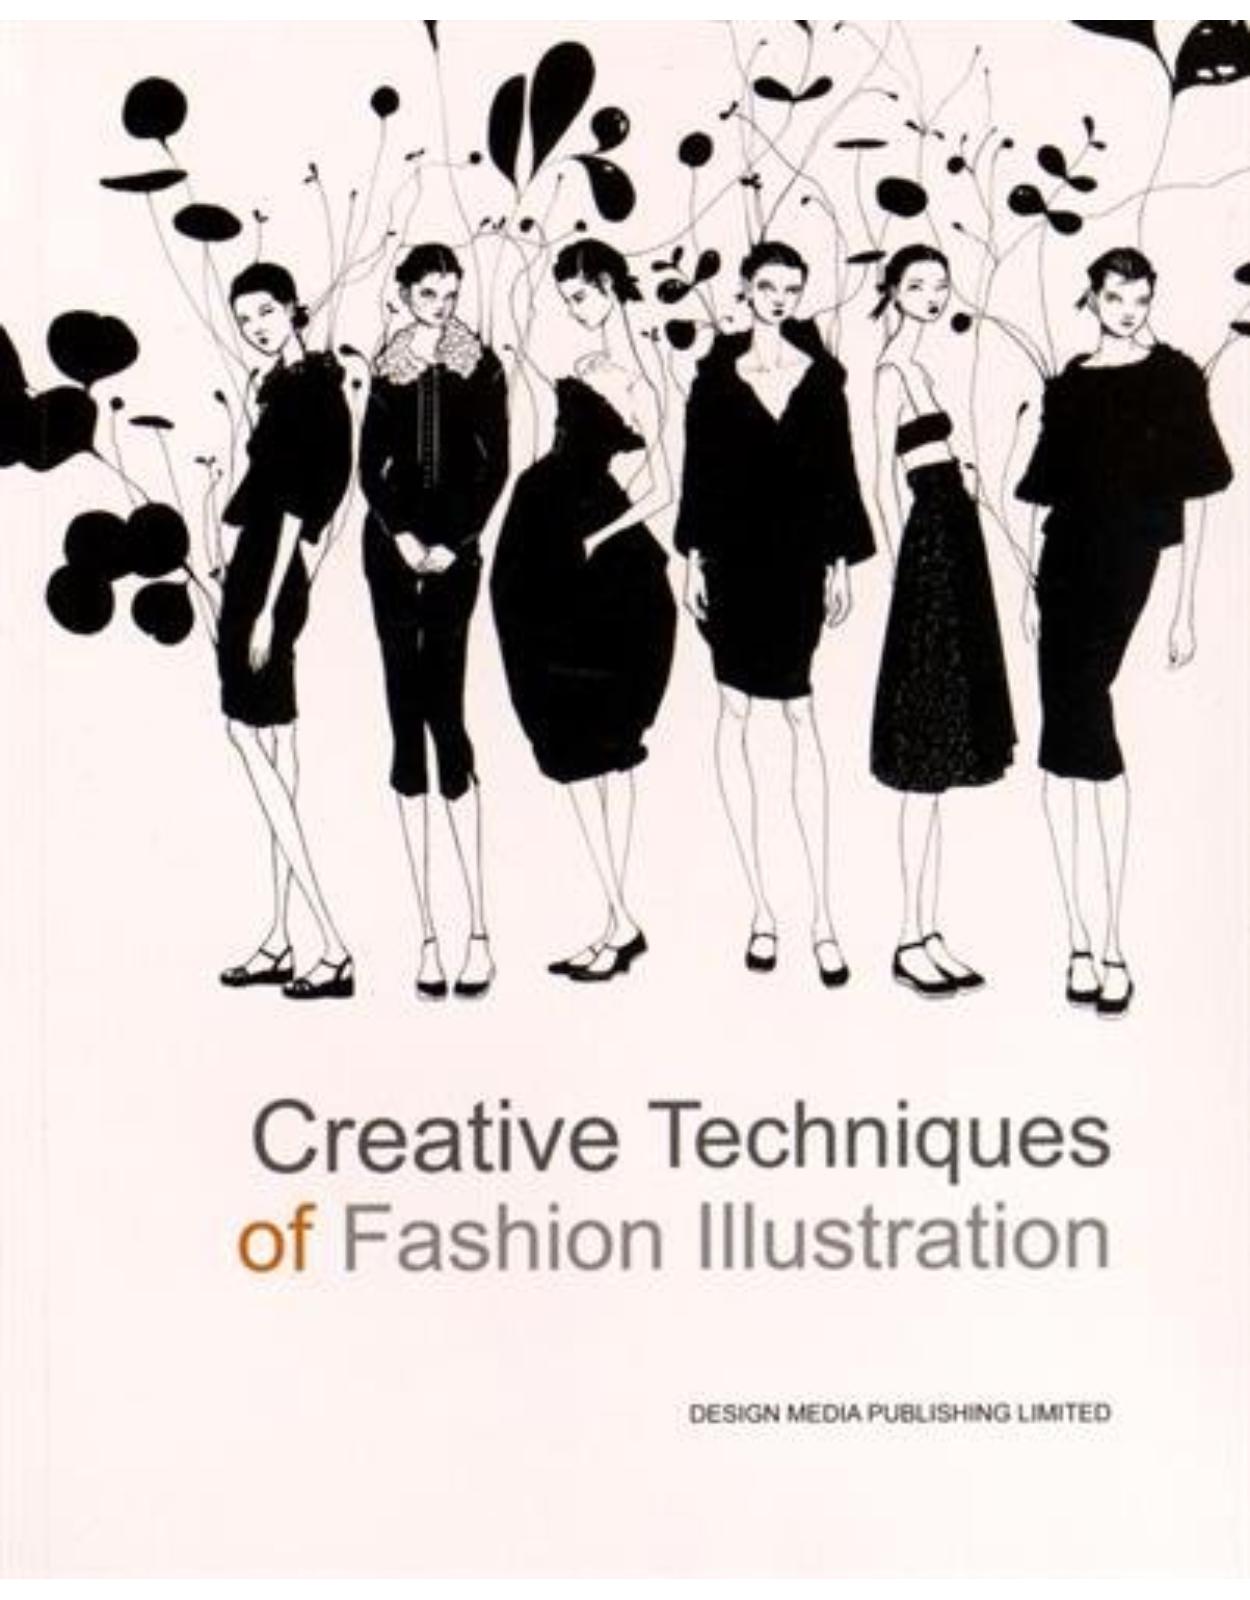 Creative Techniques of Fashion Illustration